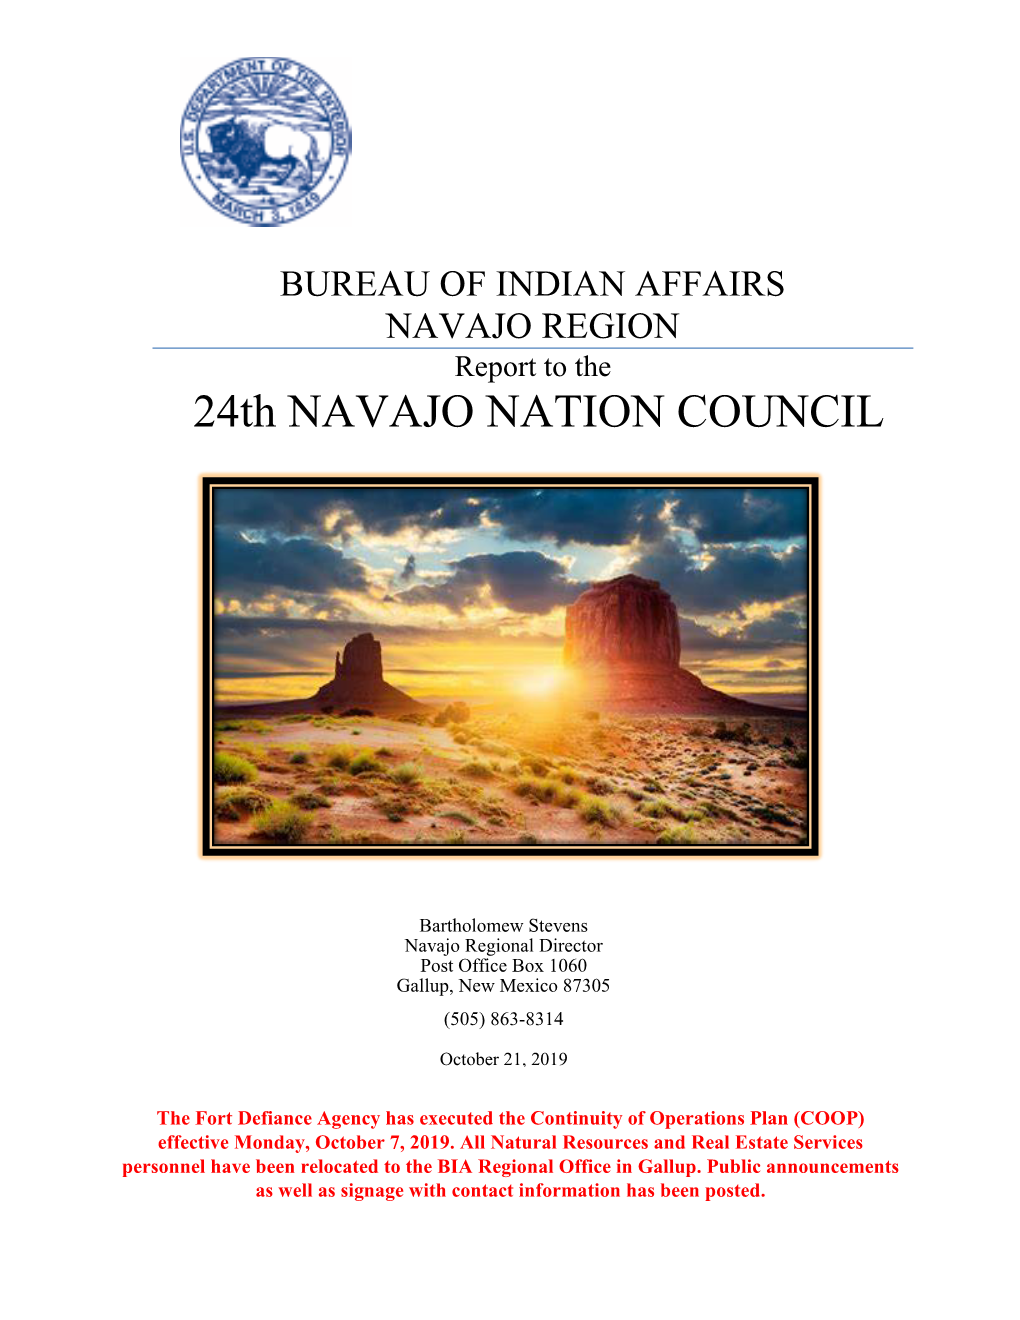 Bureau of Indian Affairs Report